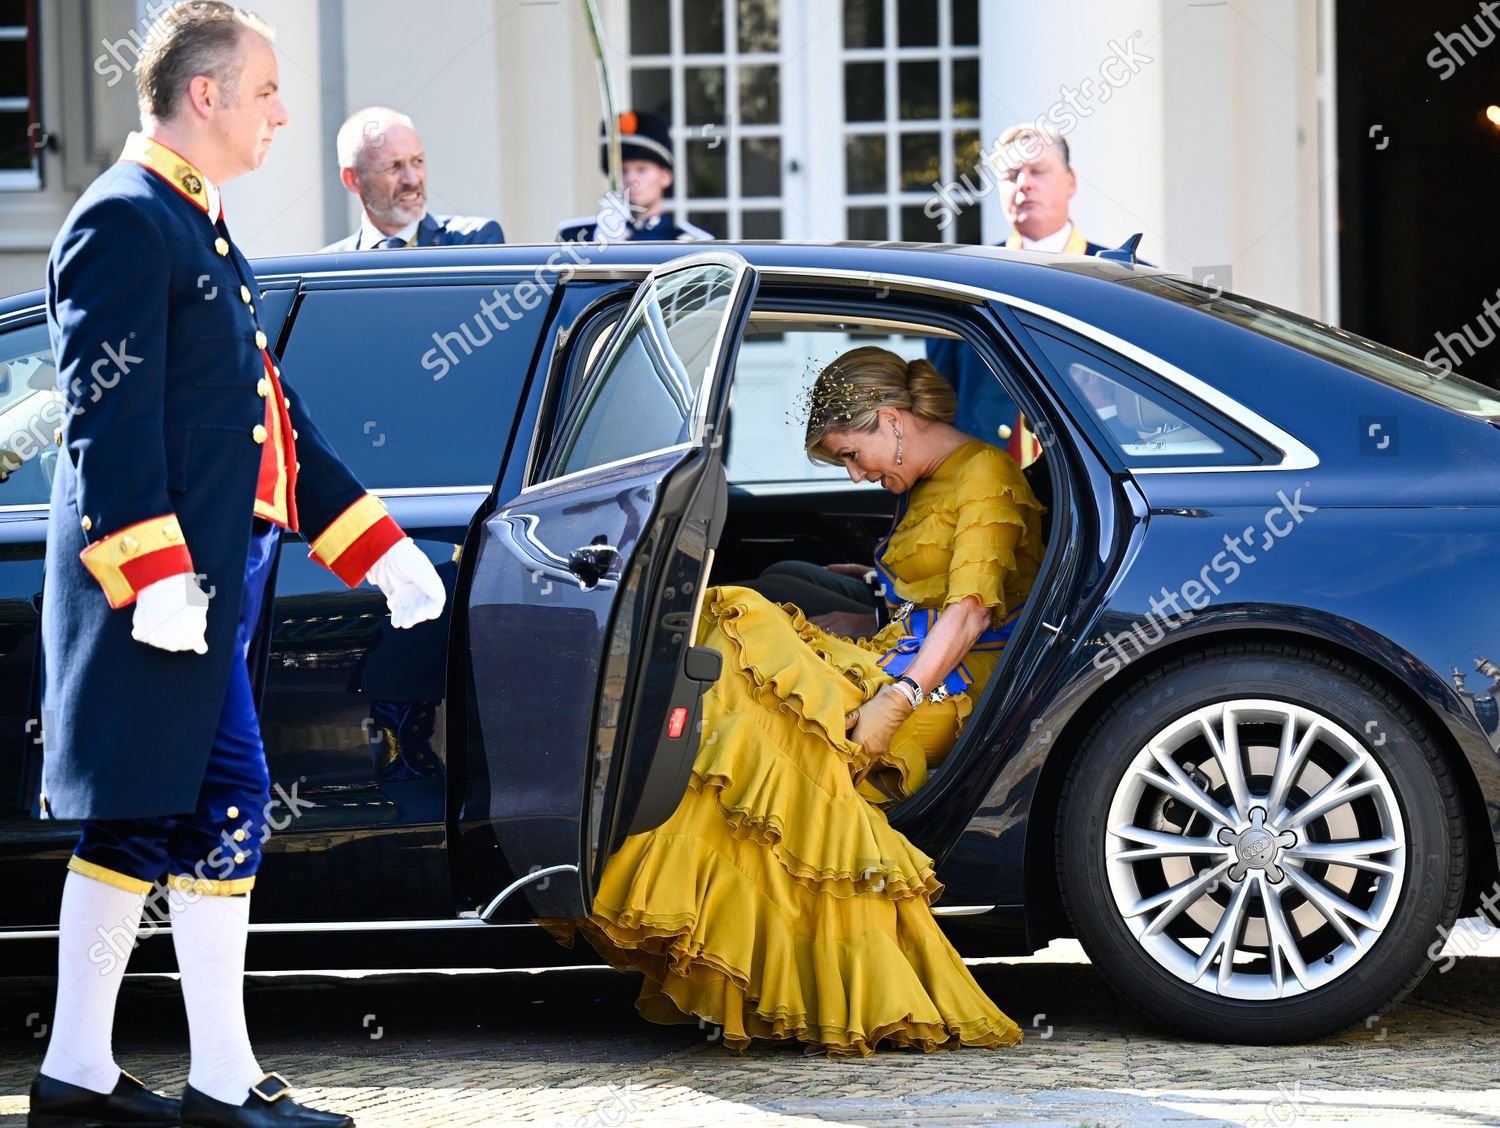 prinsjesdag-ceremony-the-hague-the-netherlands-shutterstock-editorial-10777335j.jpg